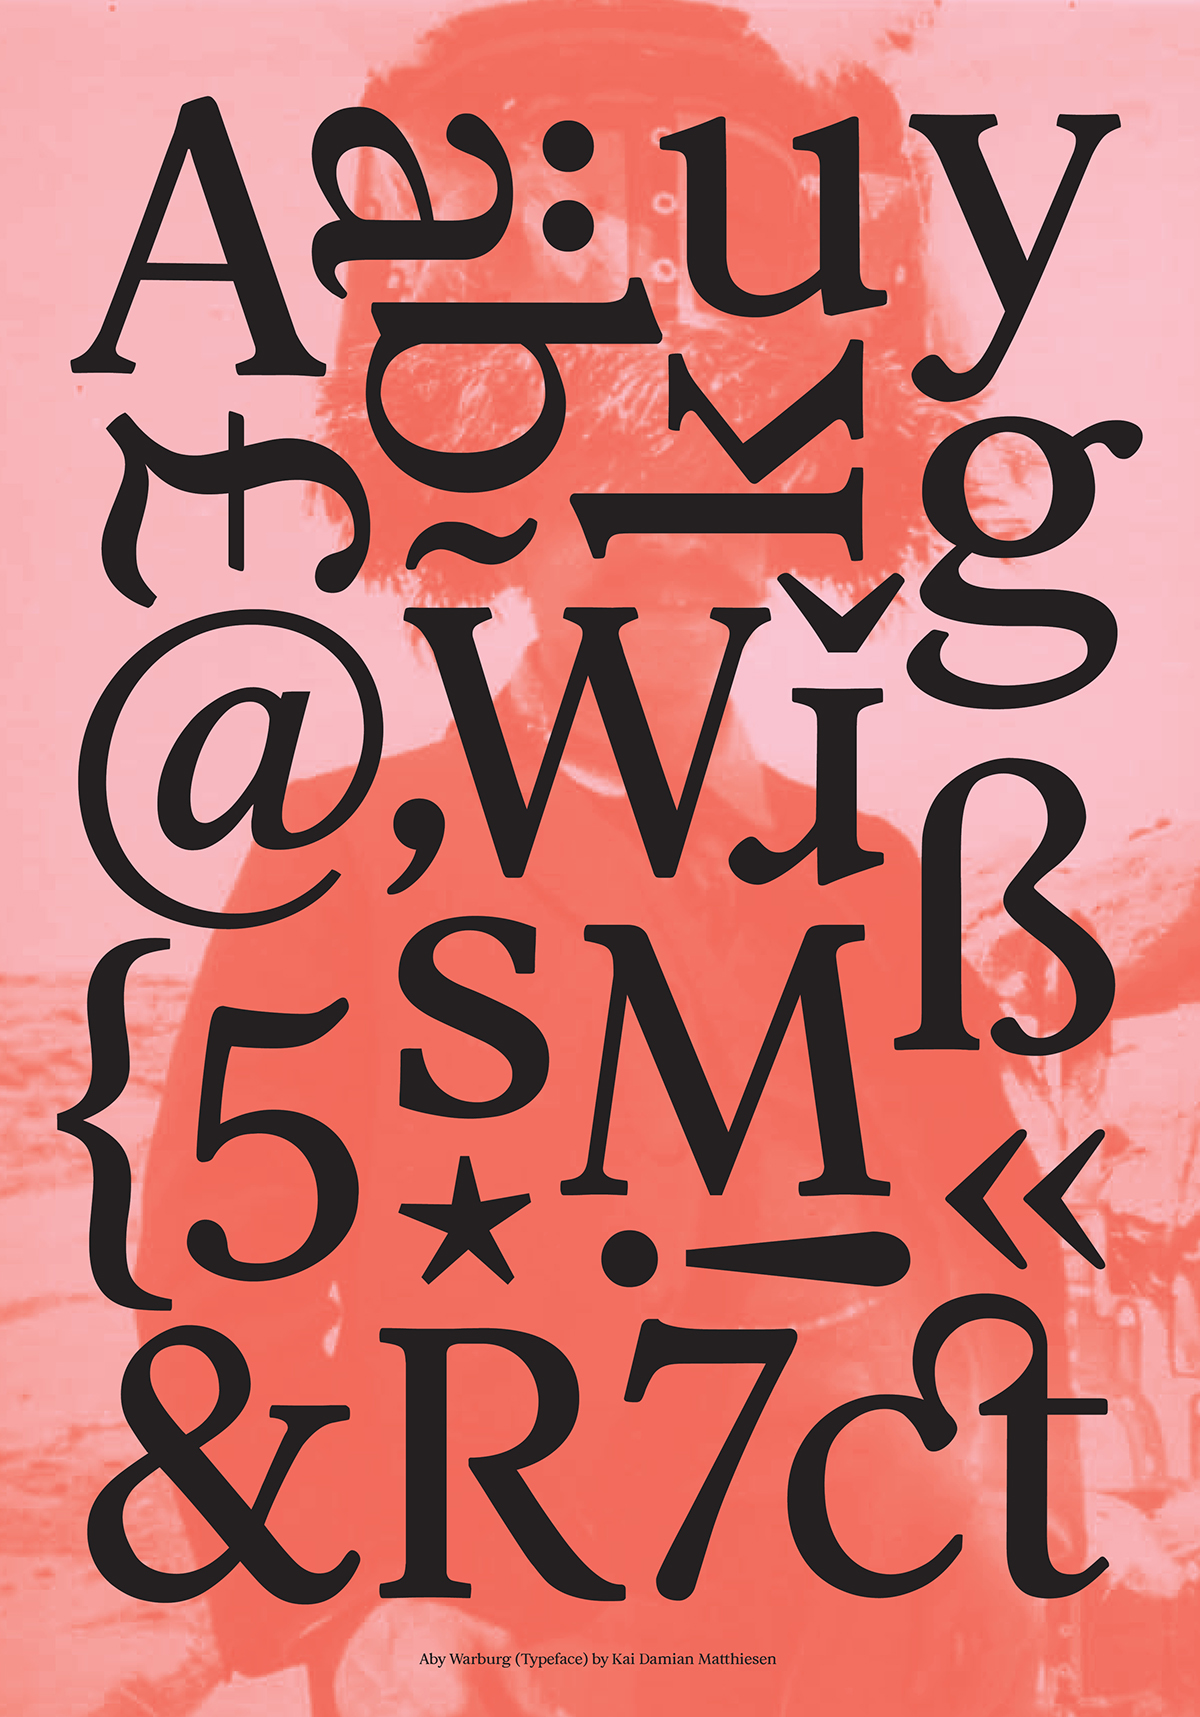 type design serif font typographer RCA Type Specimen risograph type spec